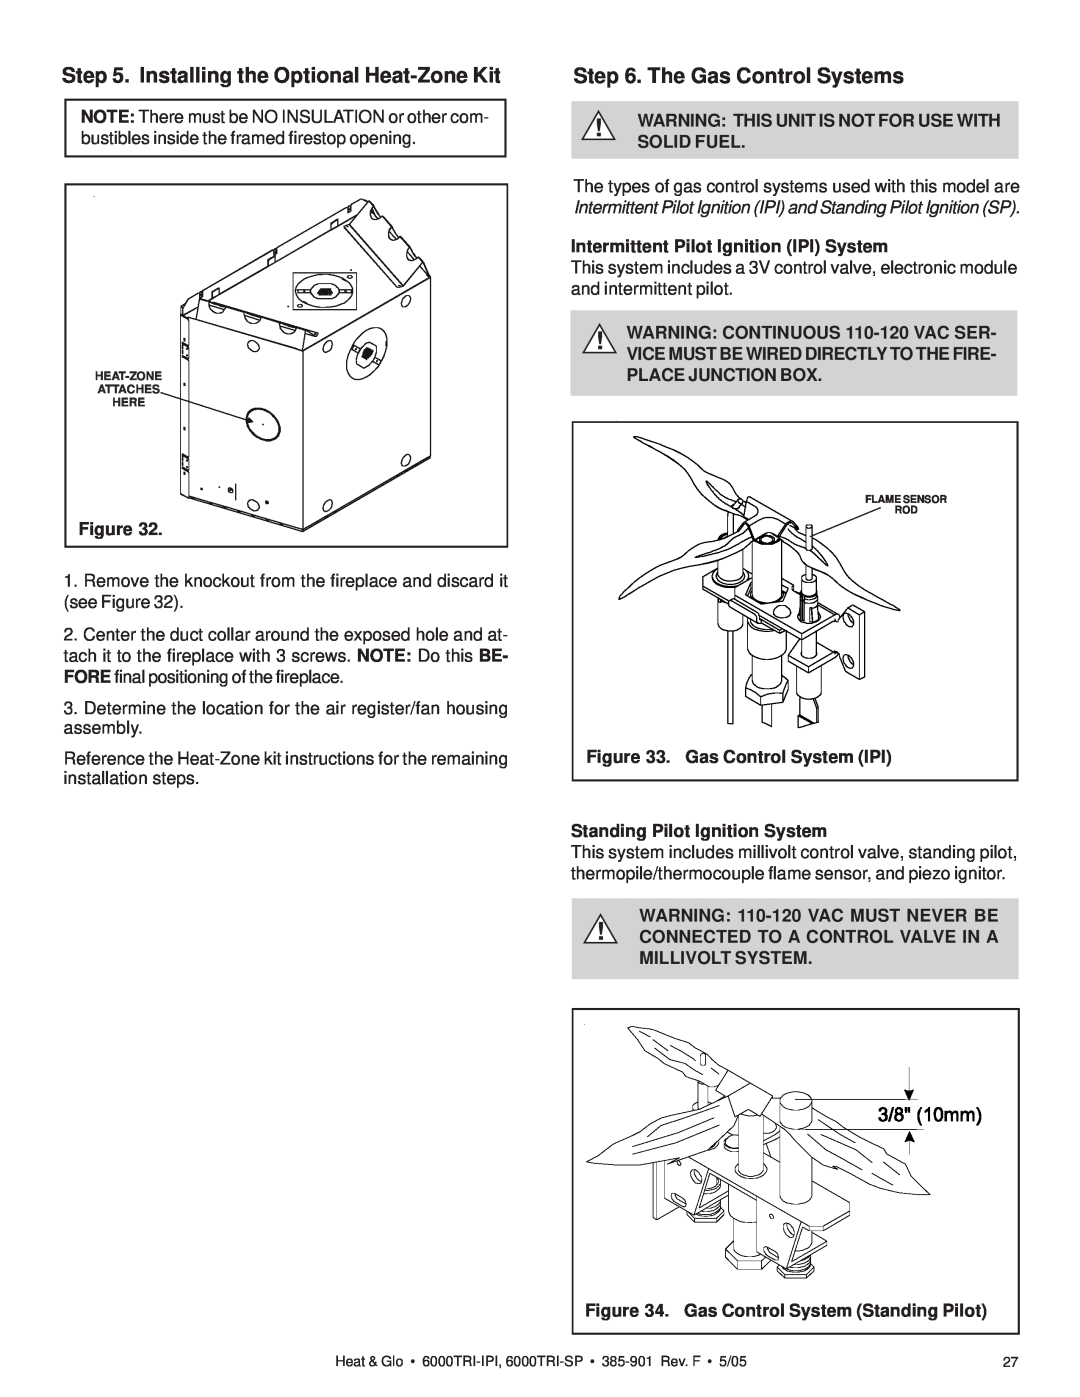 Heat & Glo LifeStyle 6000TRI-SP, 6000TRI-IPI manual Installing the Optional Heat-ZoneKit, The Gas Control Systems 